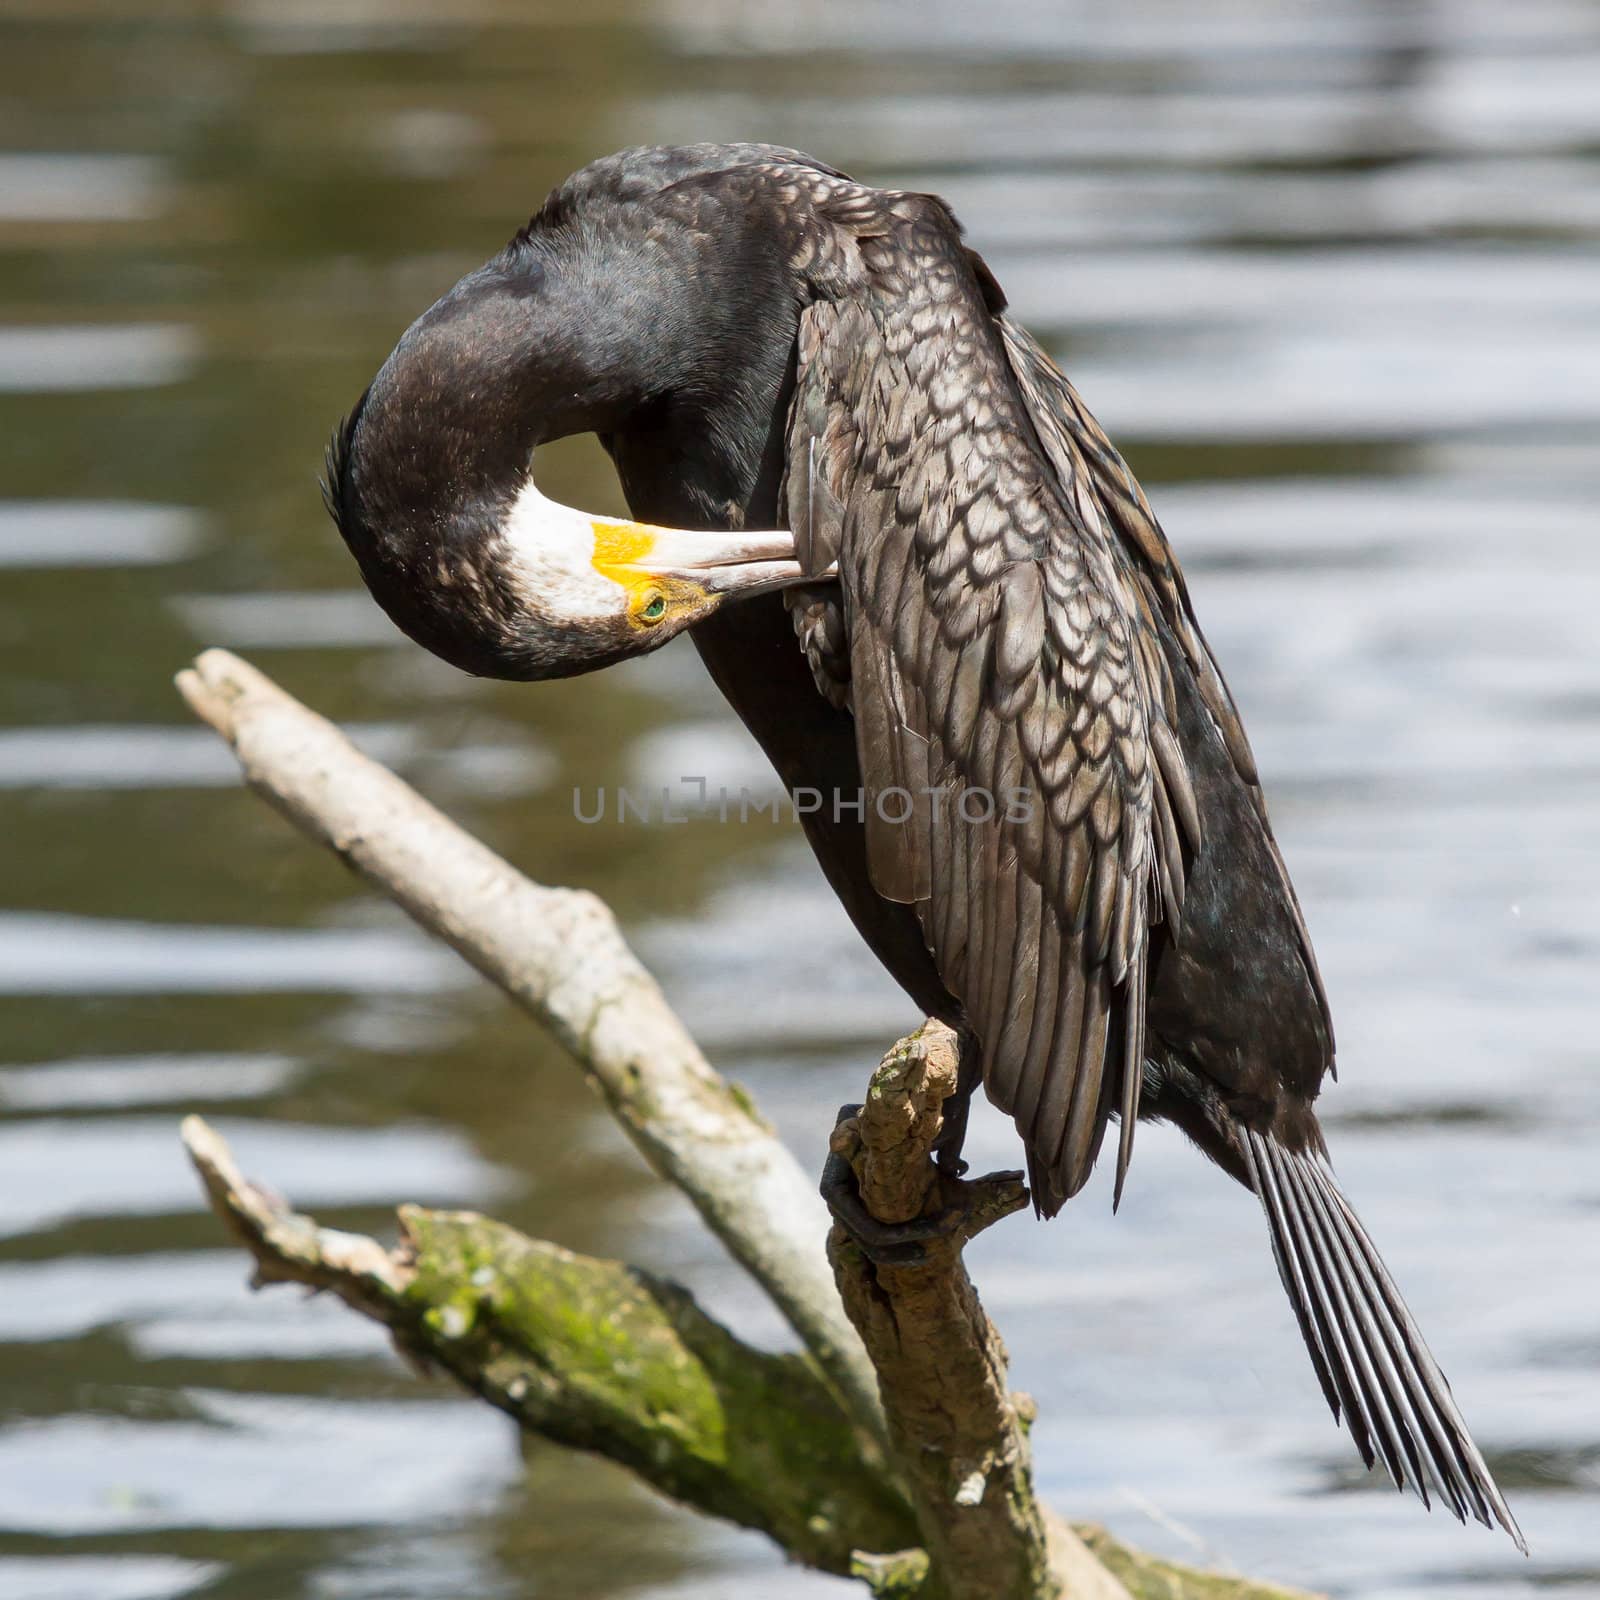 Cormorant in it's natural habitat by michaklootwijk